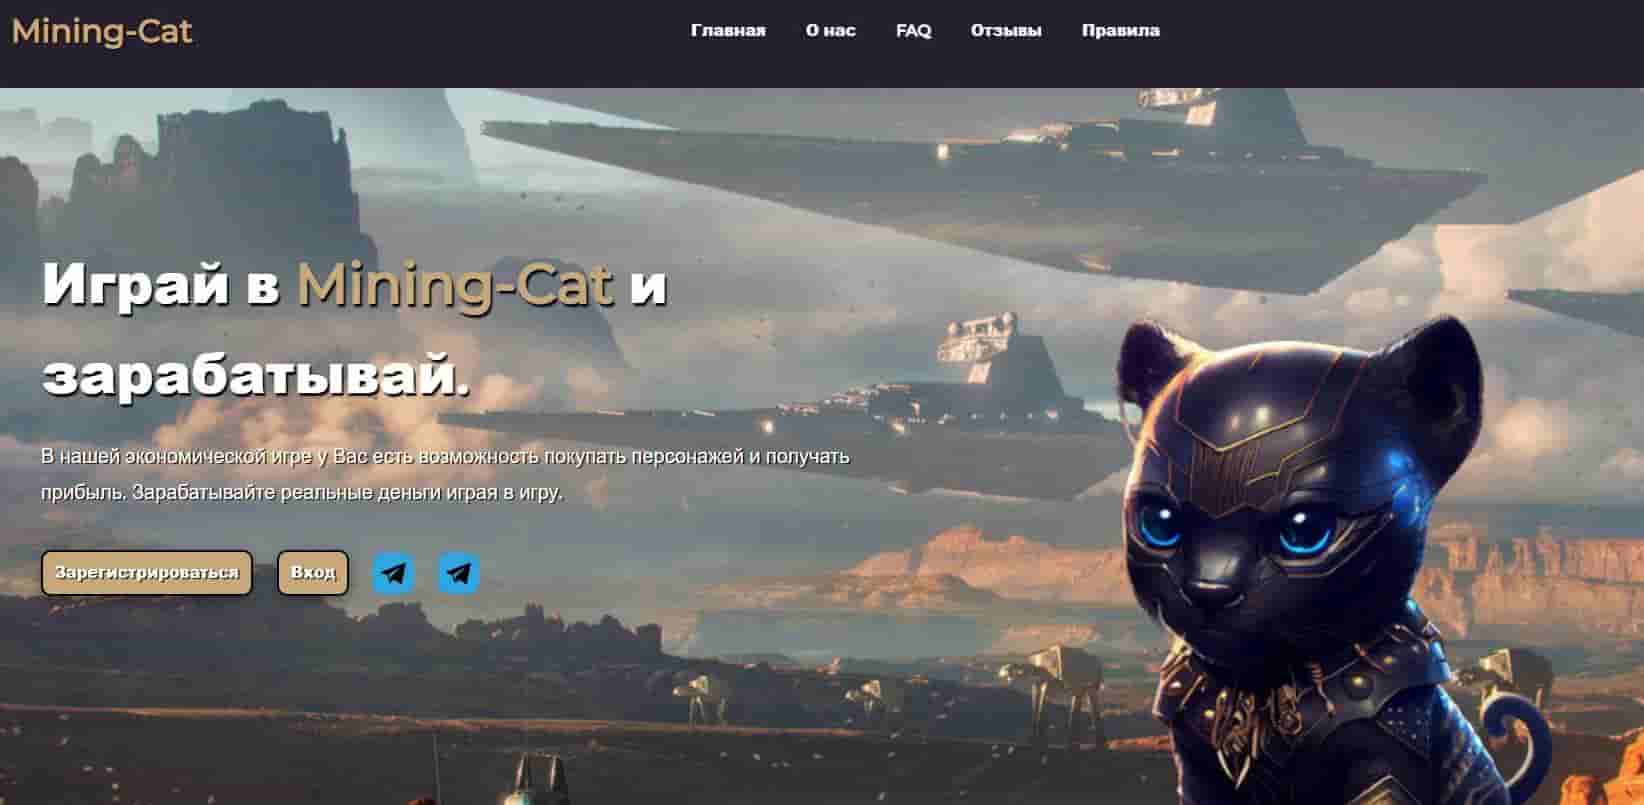 Mining-Cat